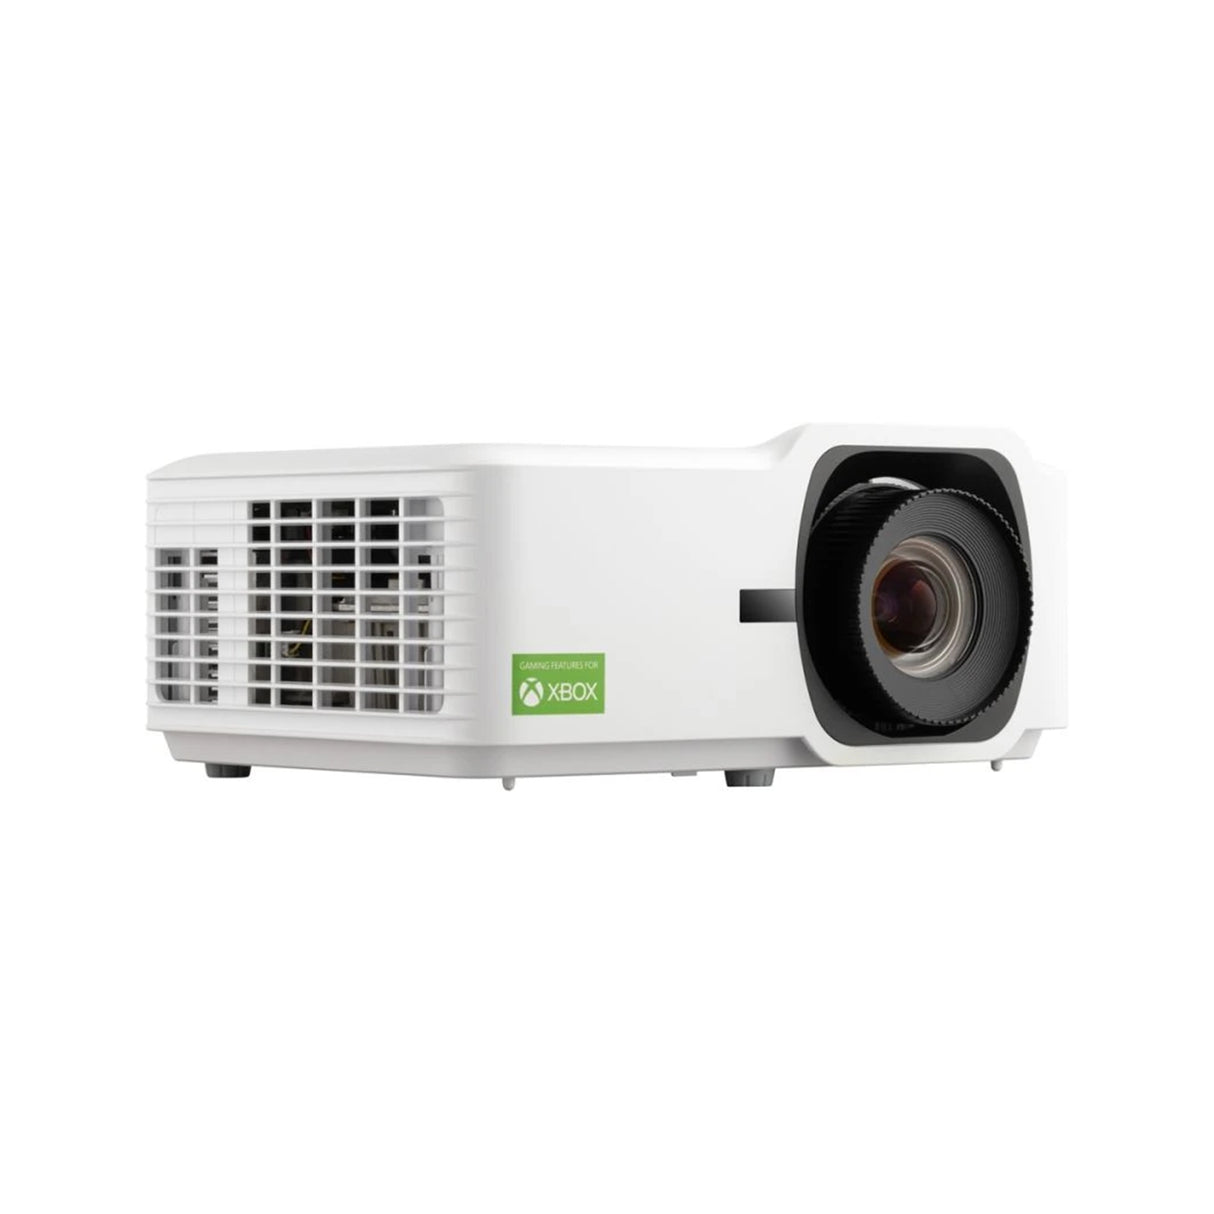 Viewsonic LX700-4K - 3500 ANSI Lumens 4K Laser Home Projector